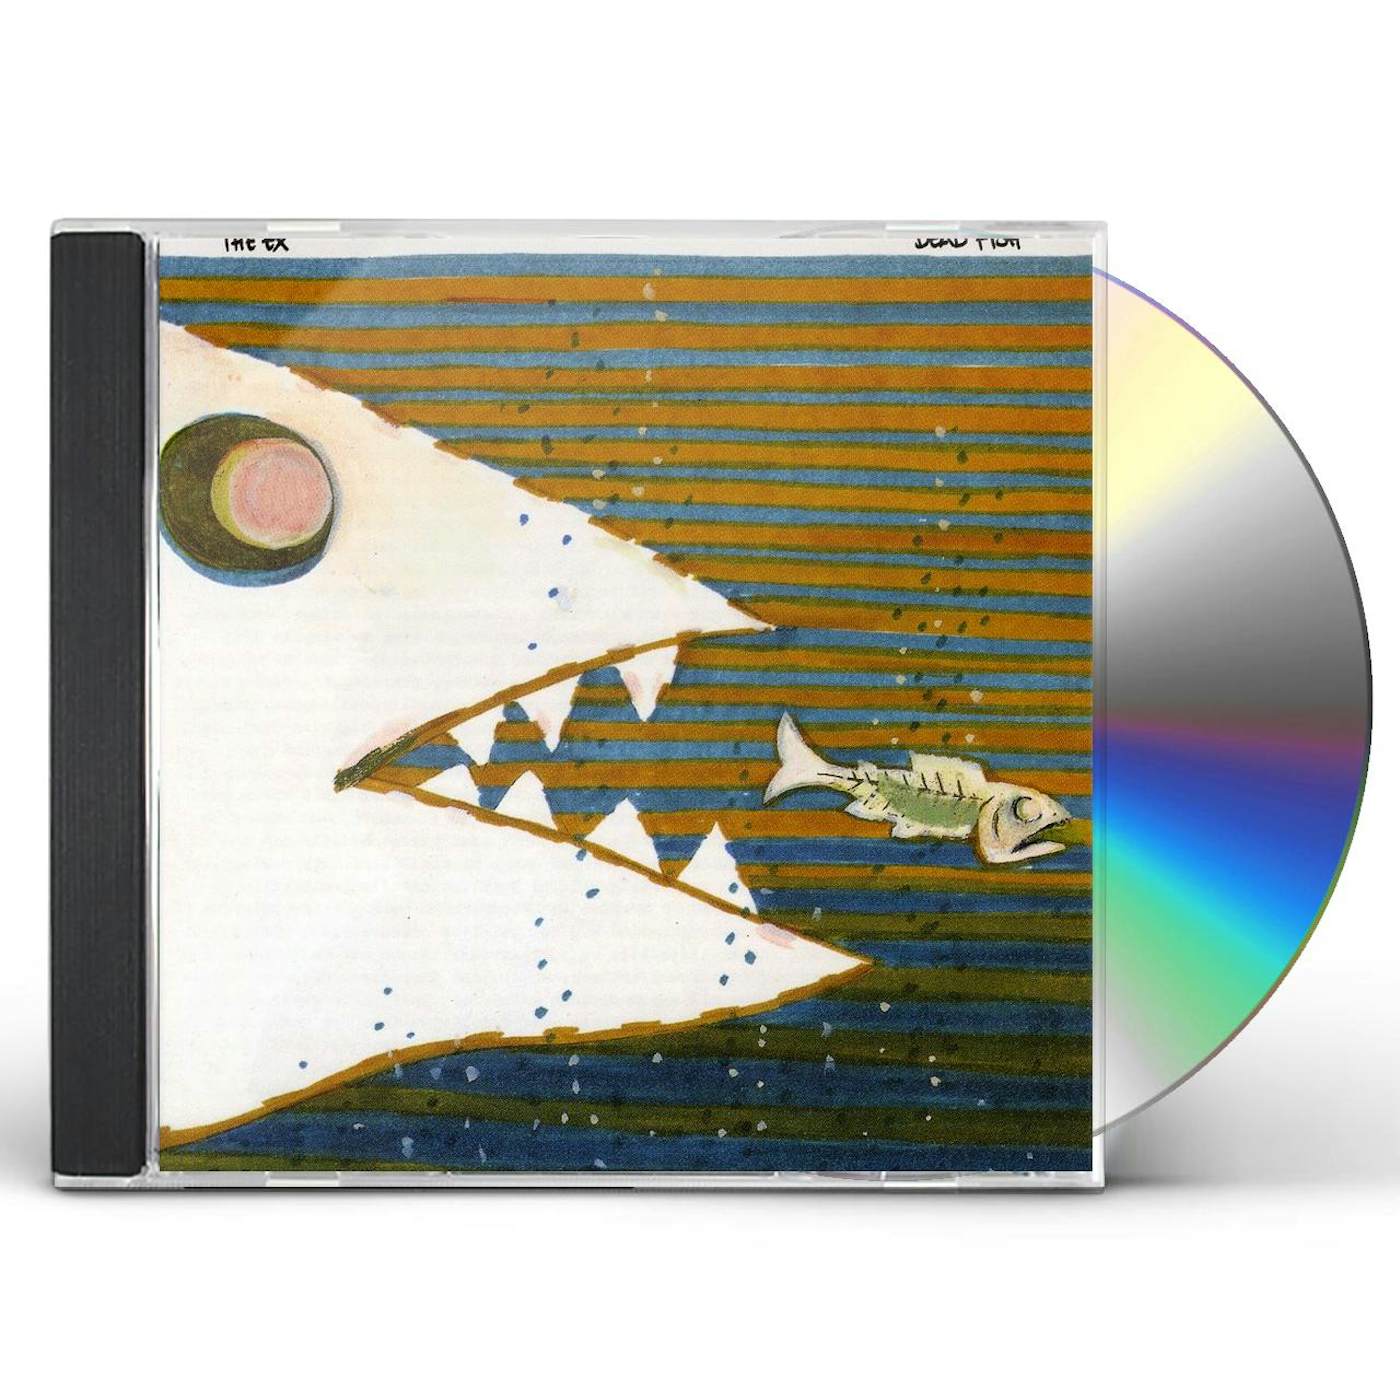 Ex DEAD FISH CD